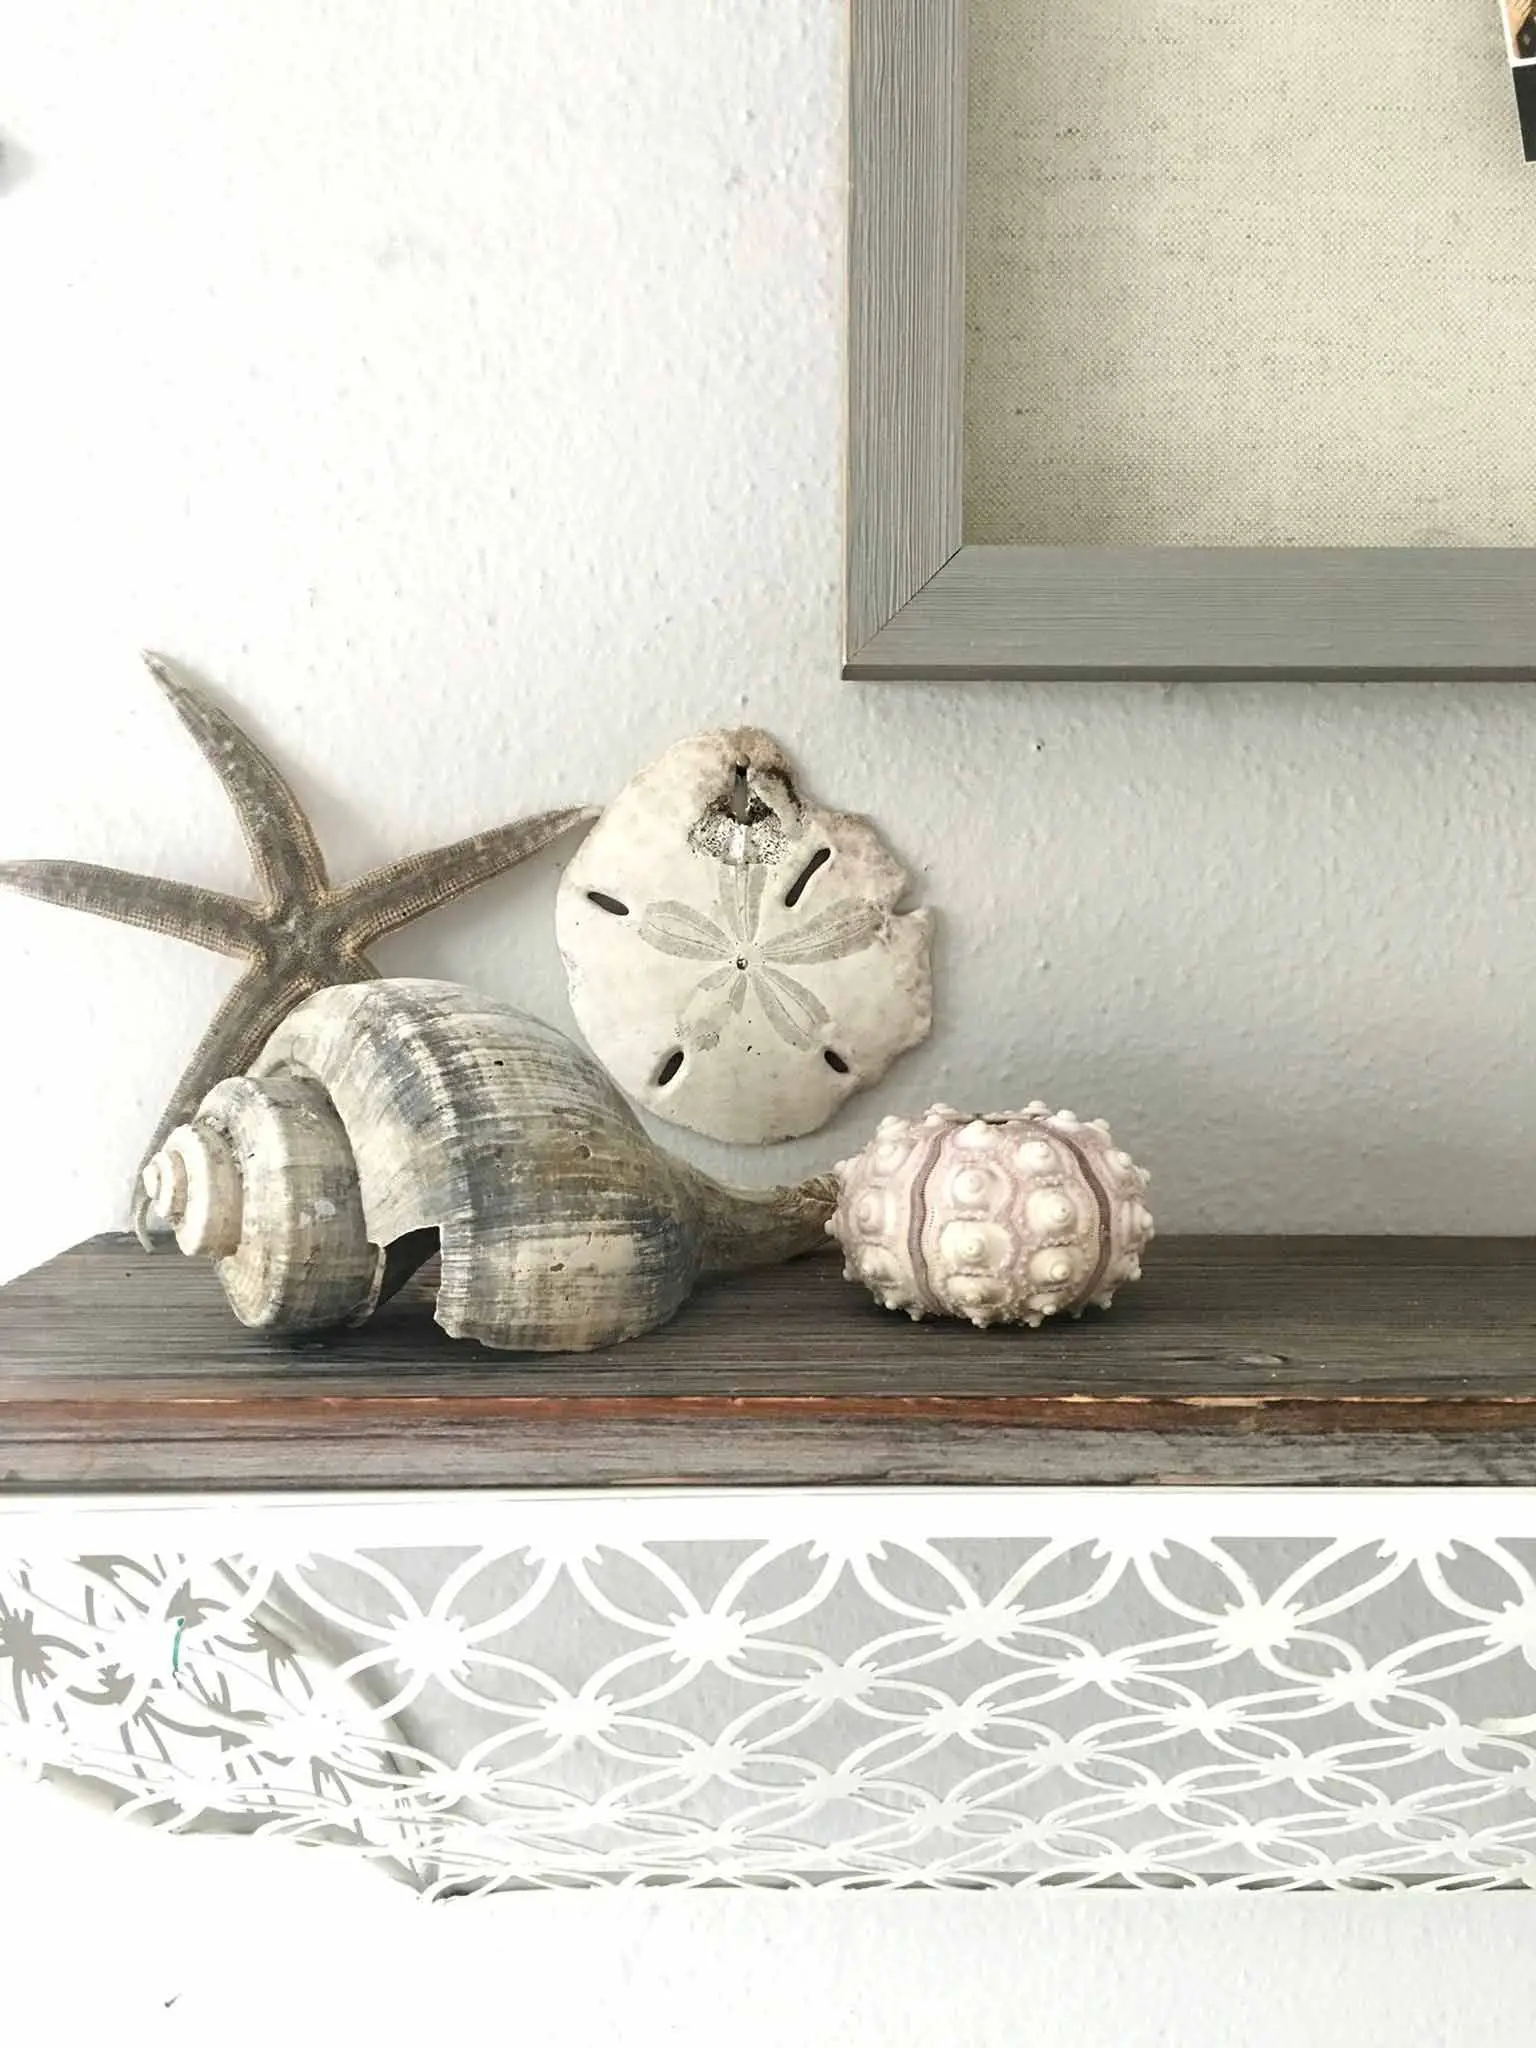 Decorative shelf and shells - modern boho tween bedroom - That Homebird Life Blog